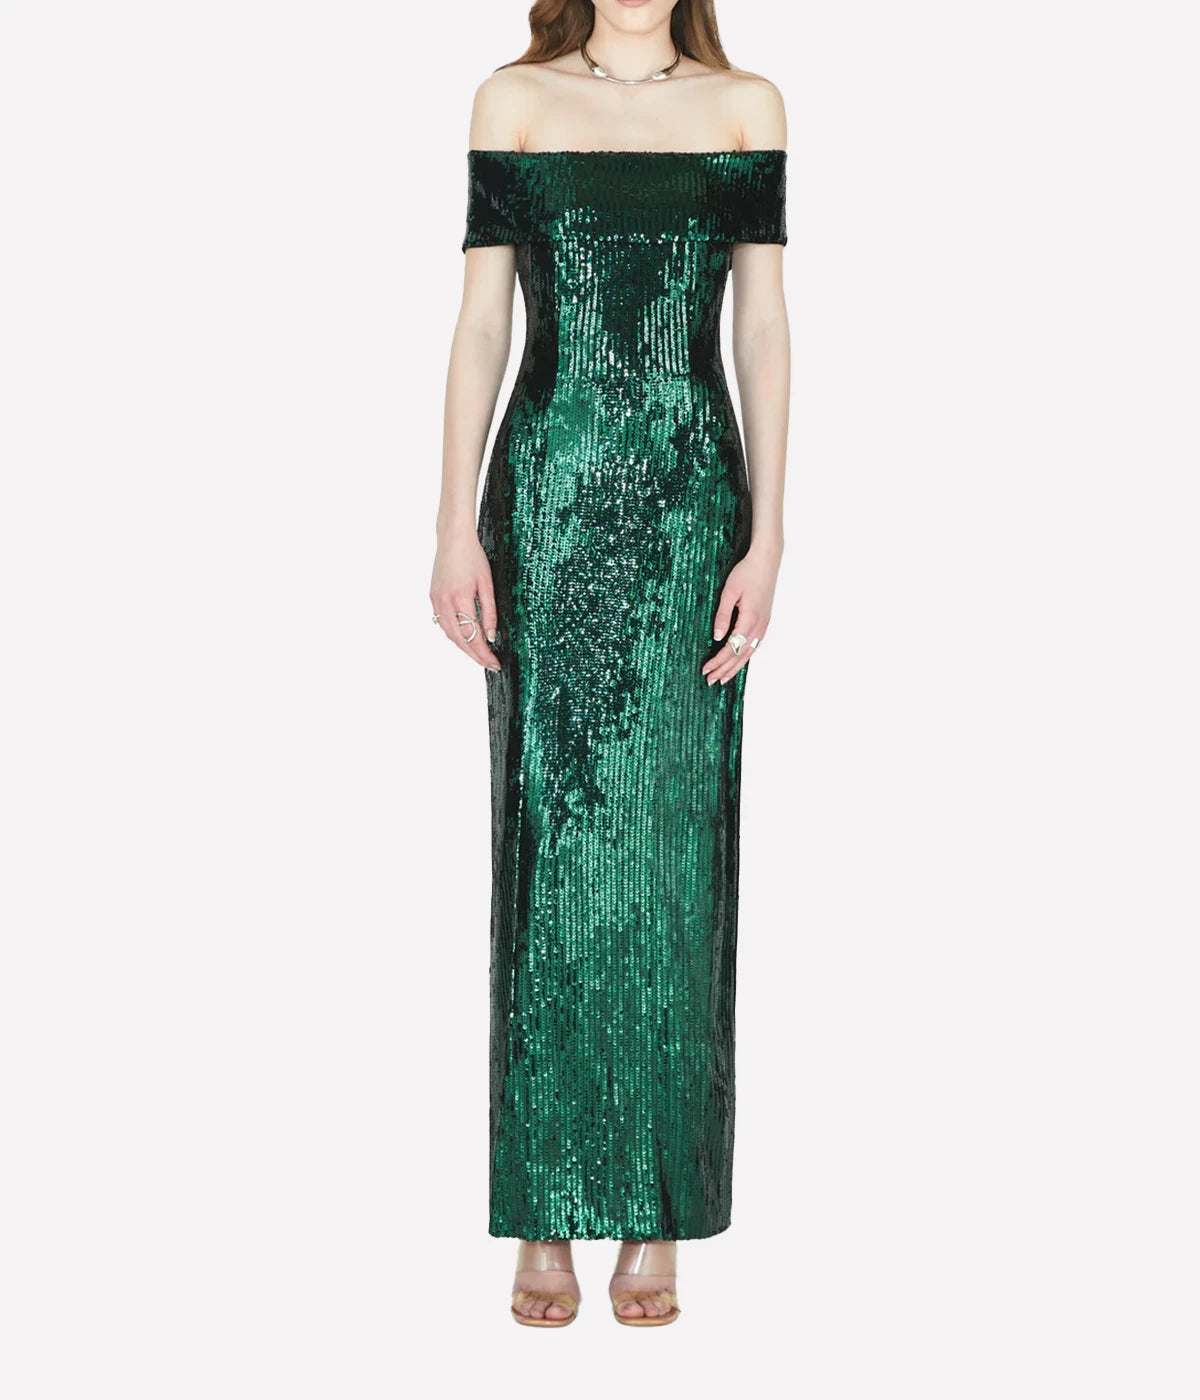 Sequin Glencoe Dress in Emerald